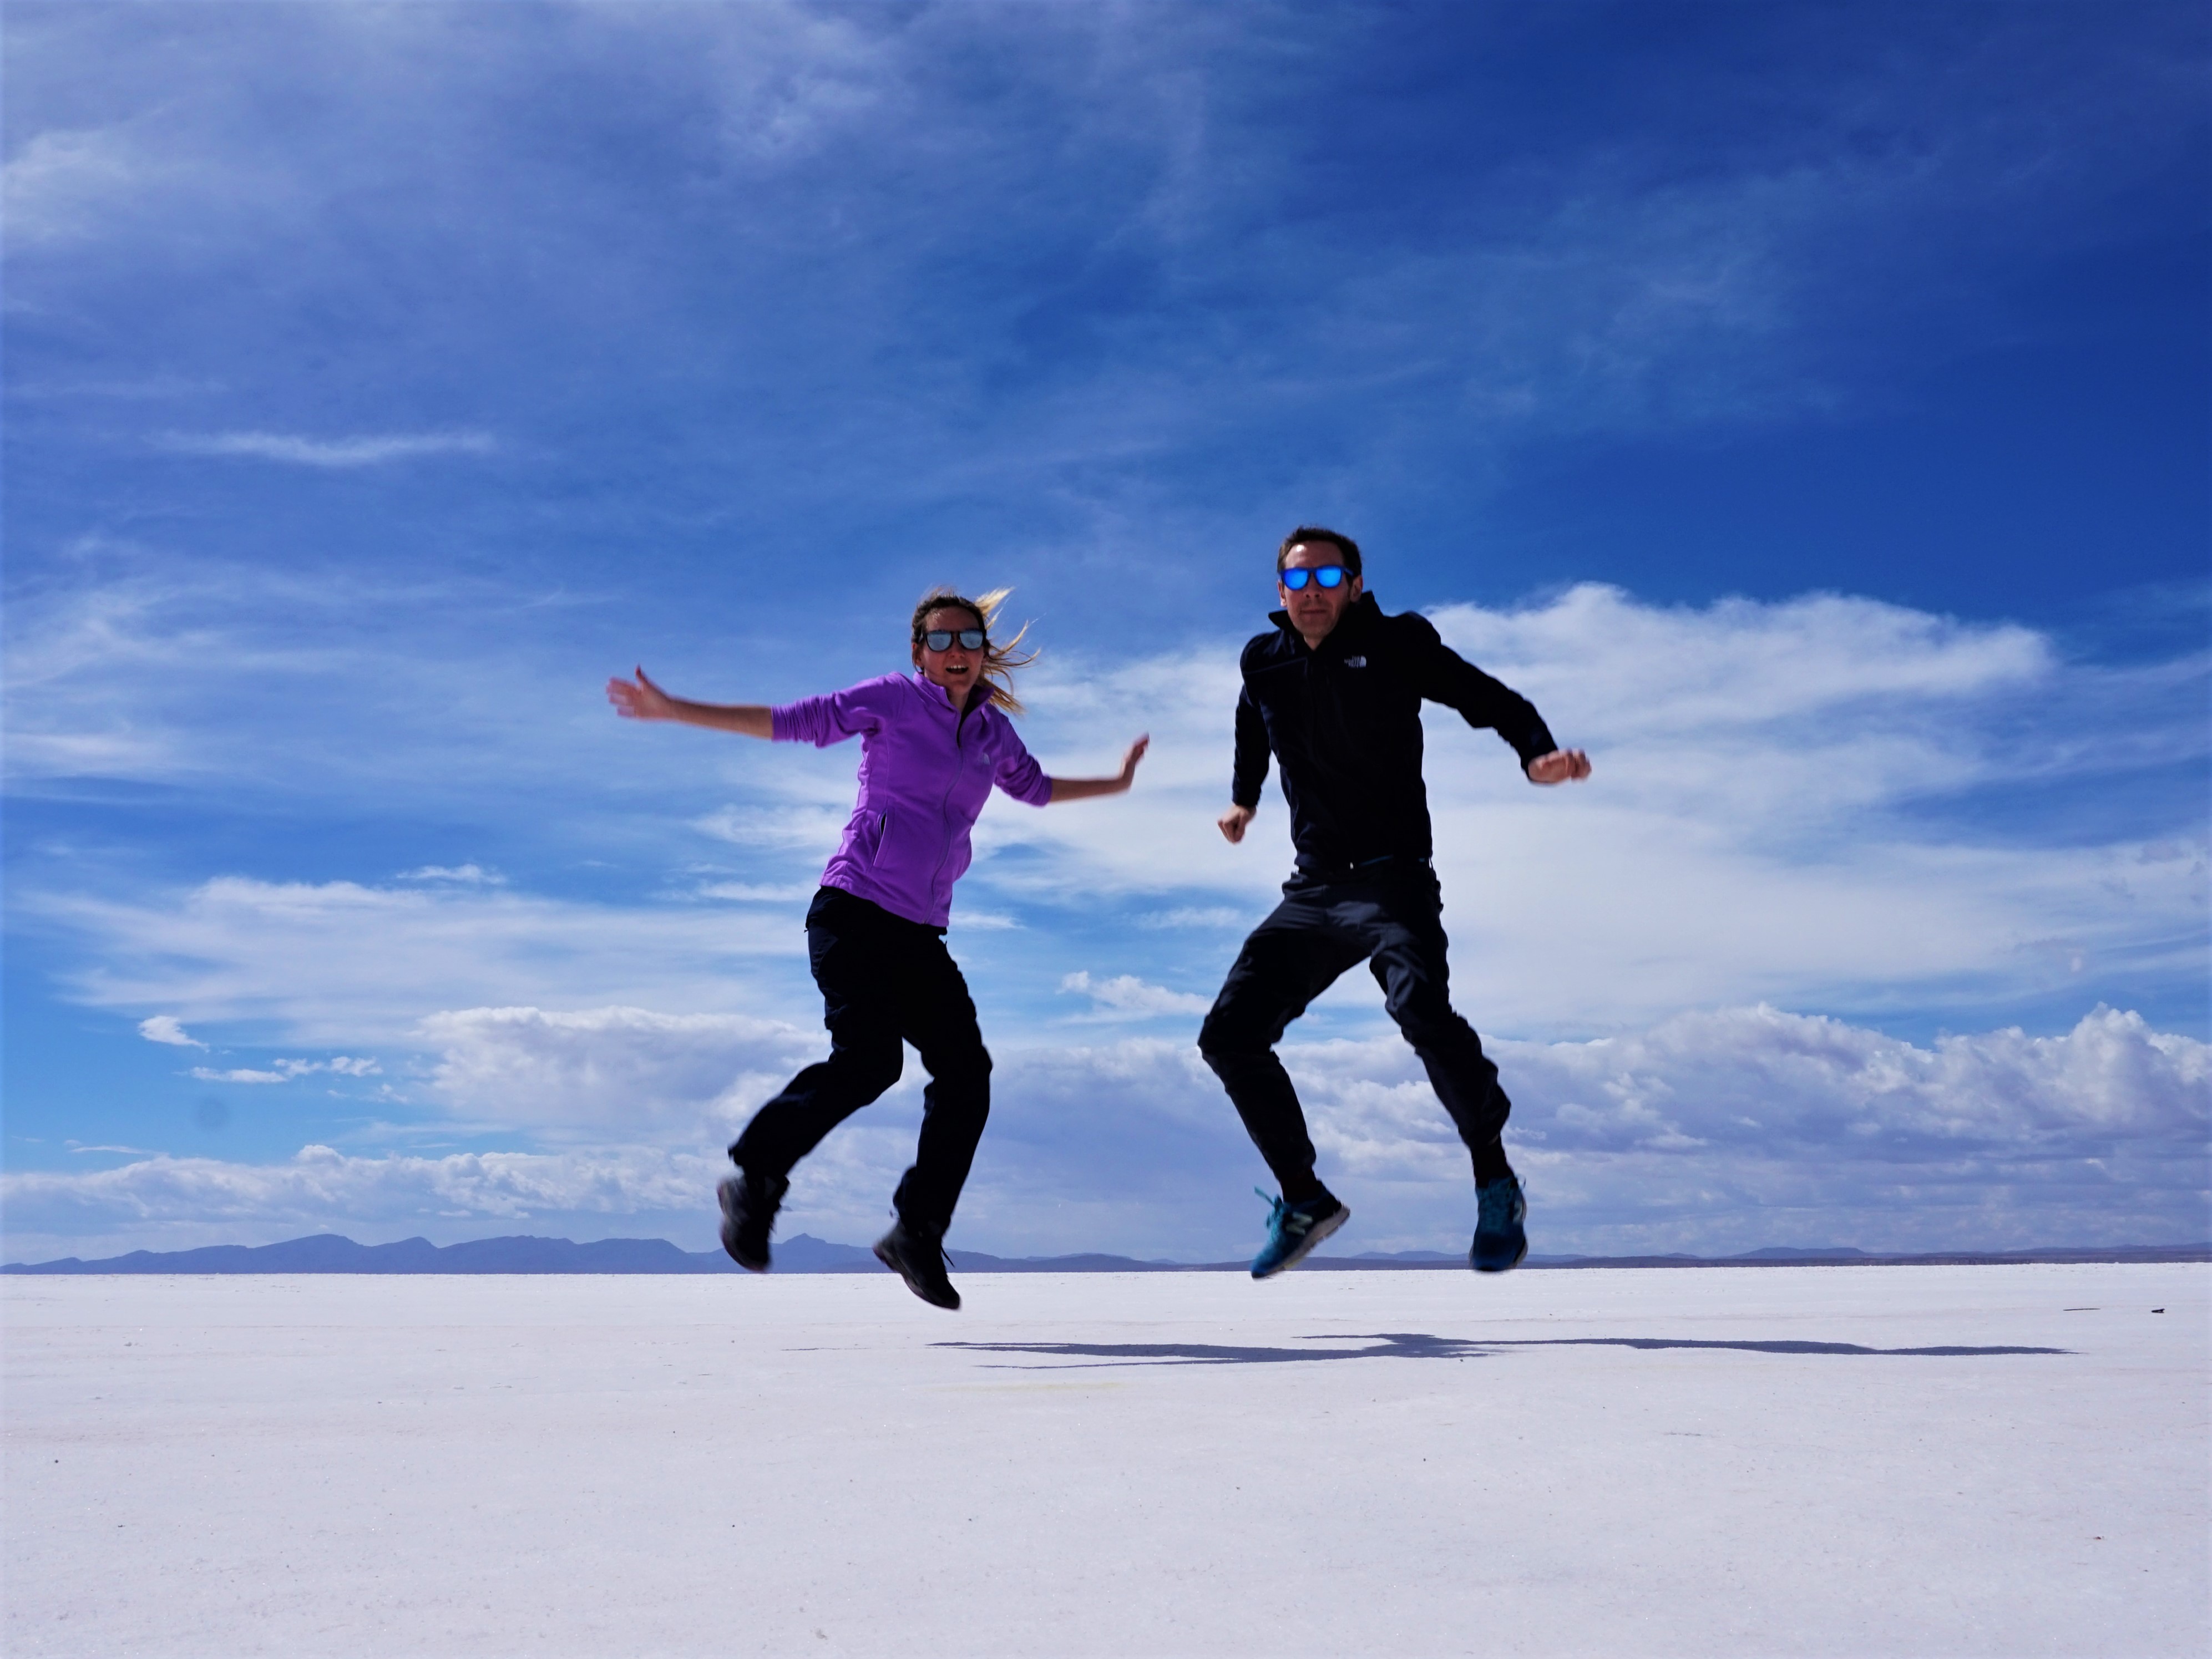 Us jumping on the Uyuni Salt Flats, Bolivia